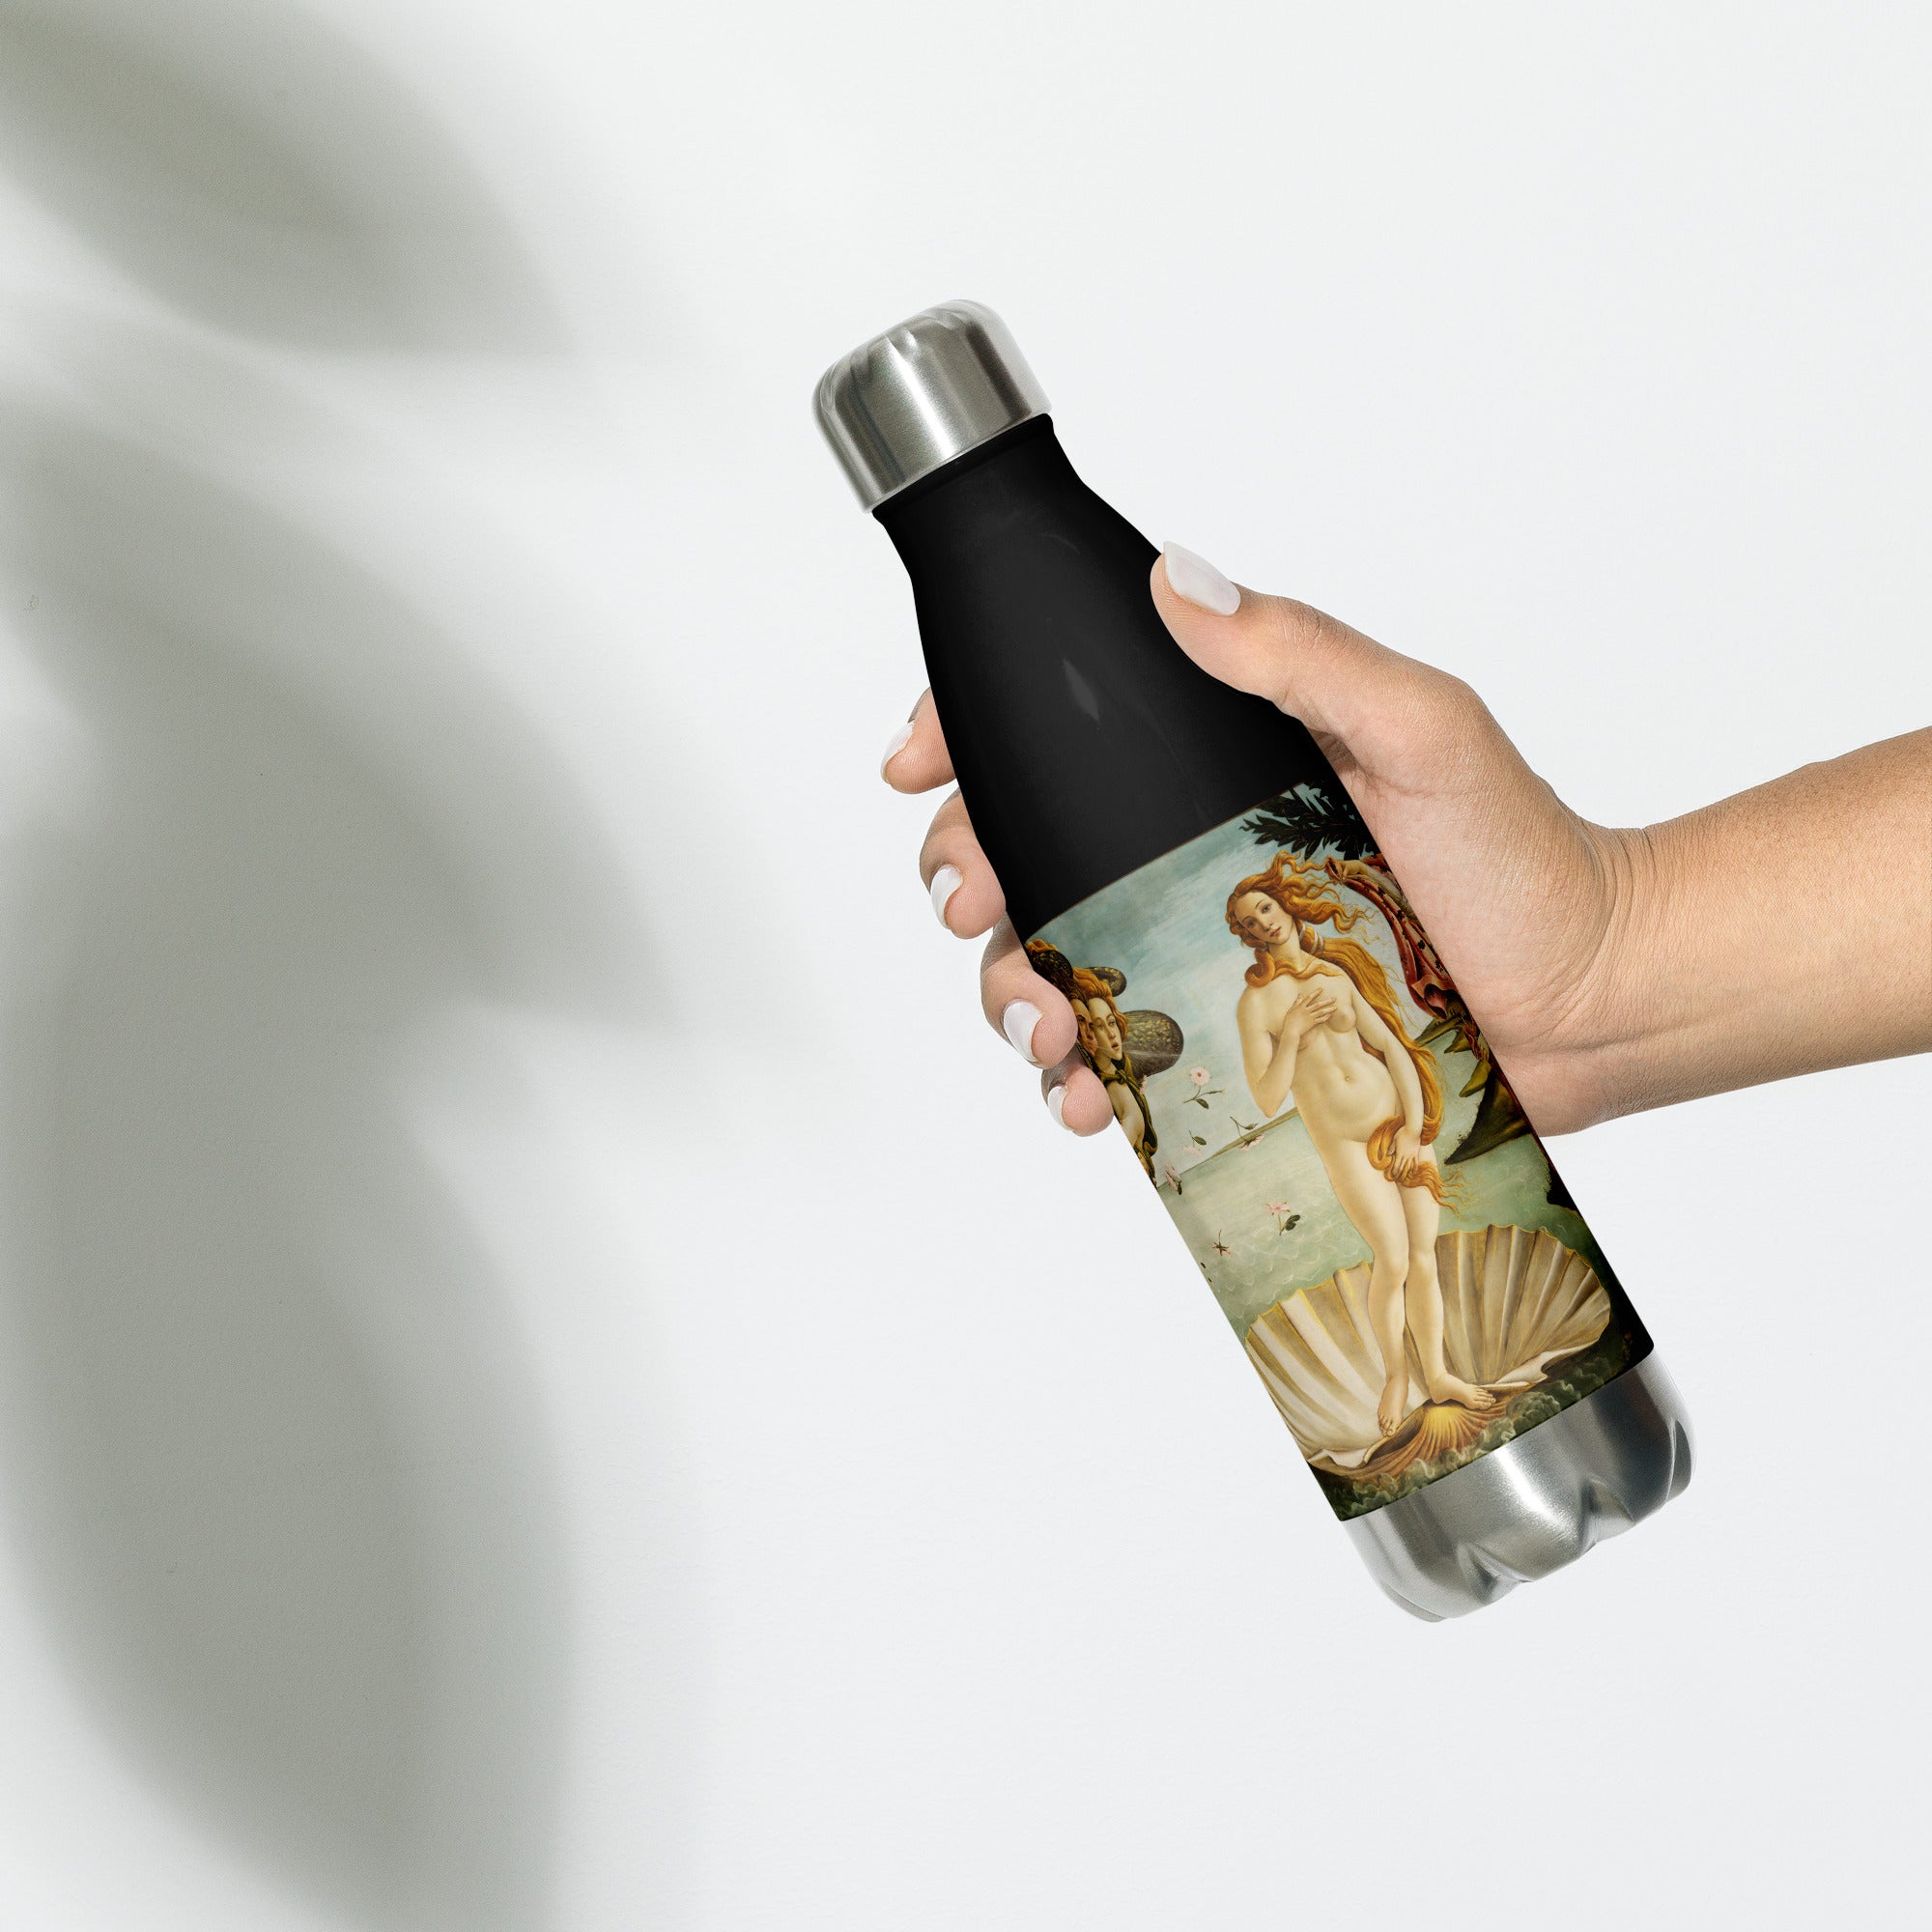 Sandro Botticelli 'The Birth of Venus' Famous Painting Water Bottle | Stainless Steel Art Water Bottle